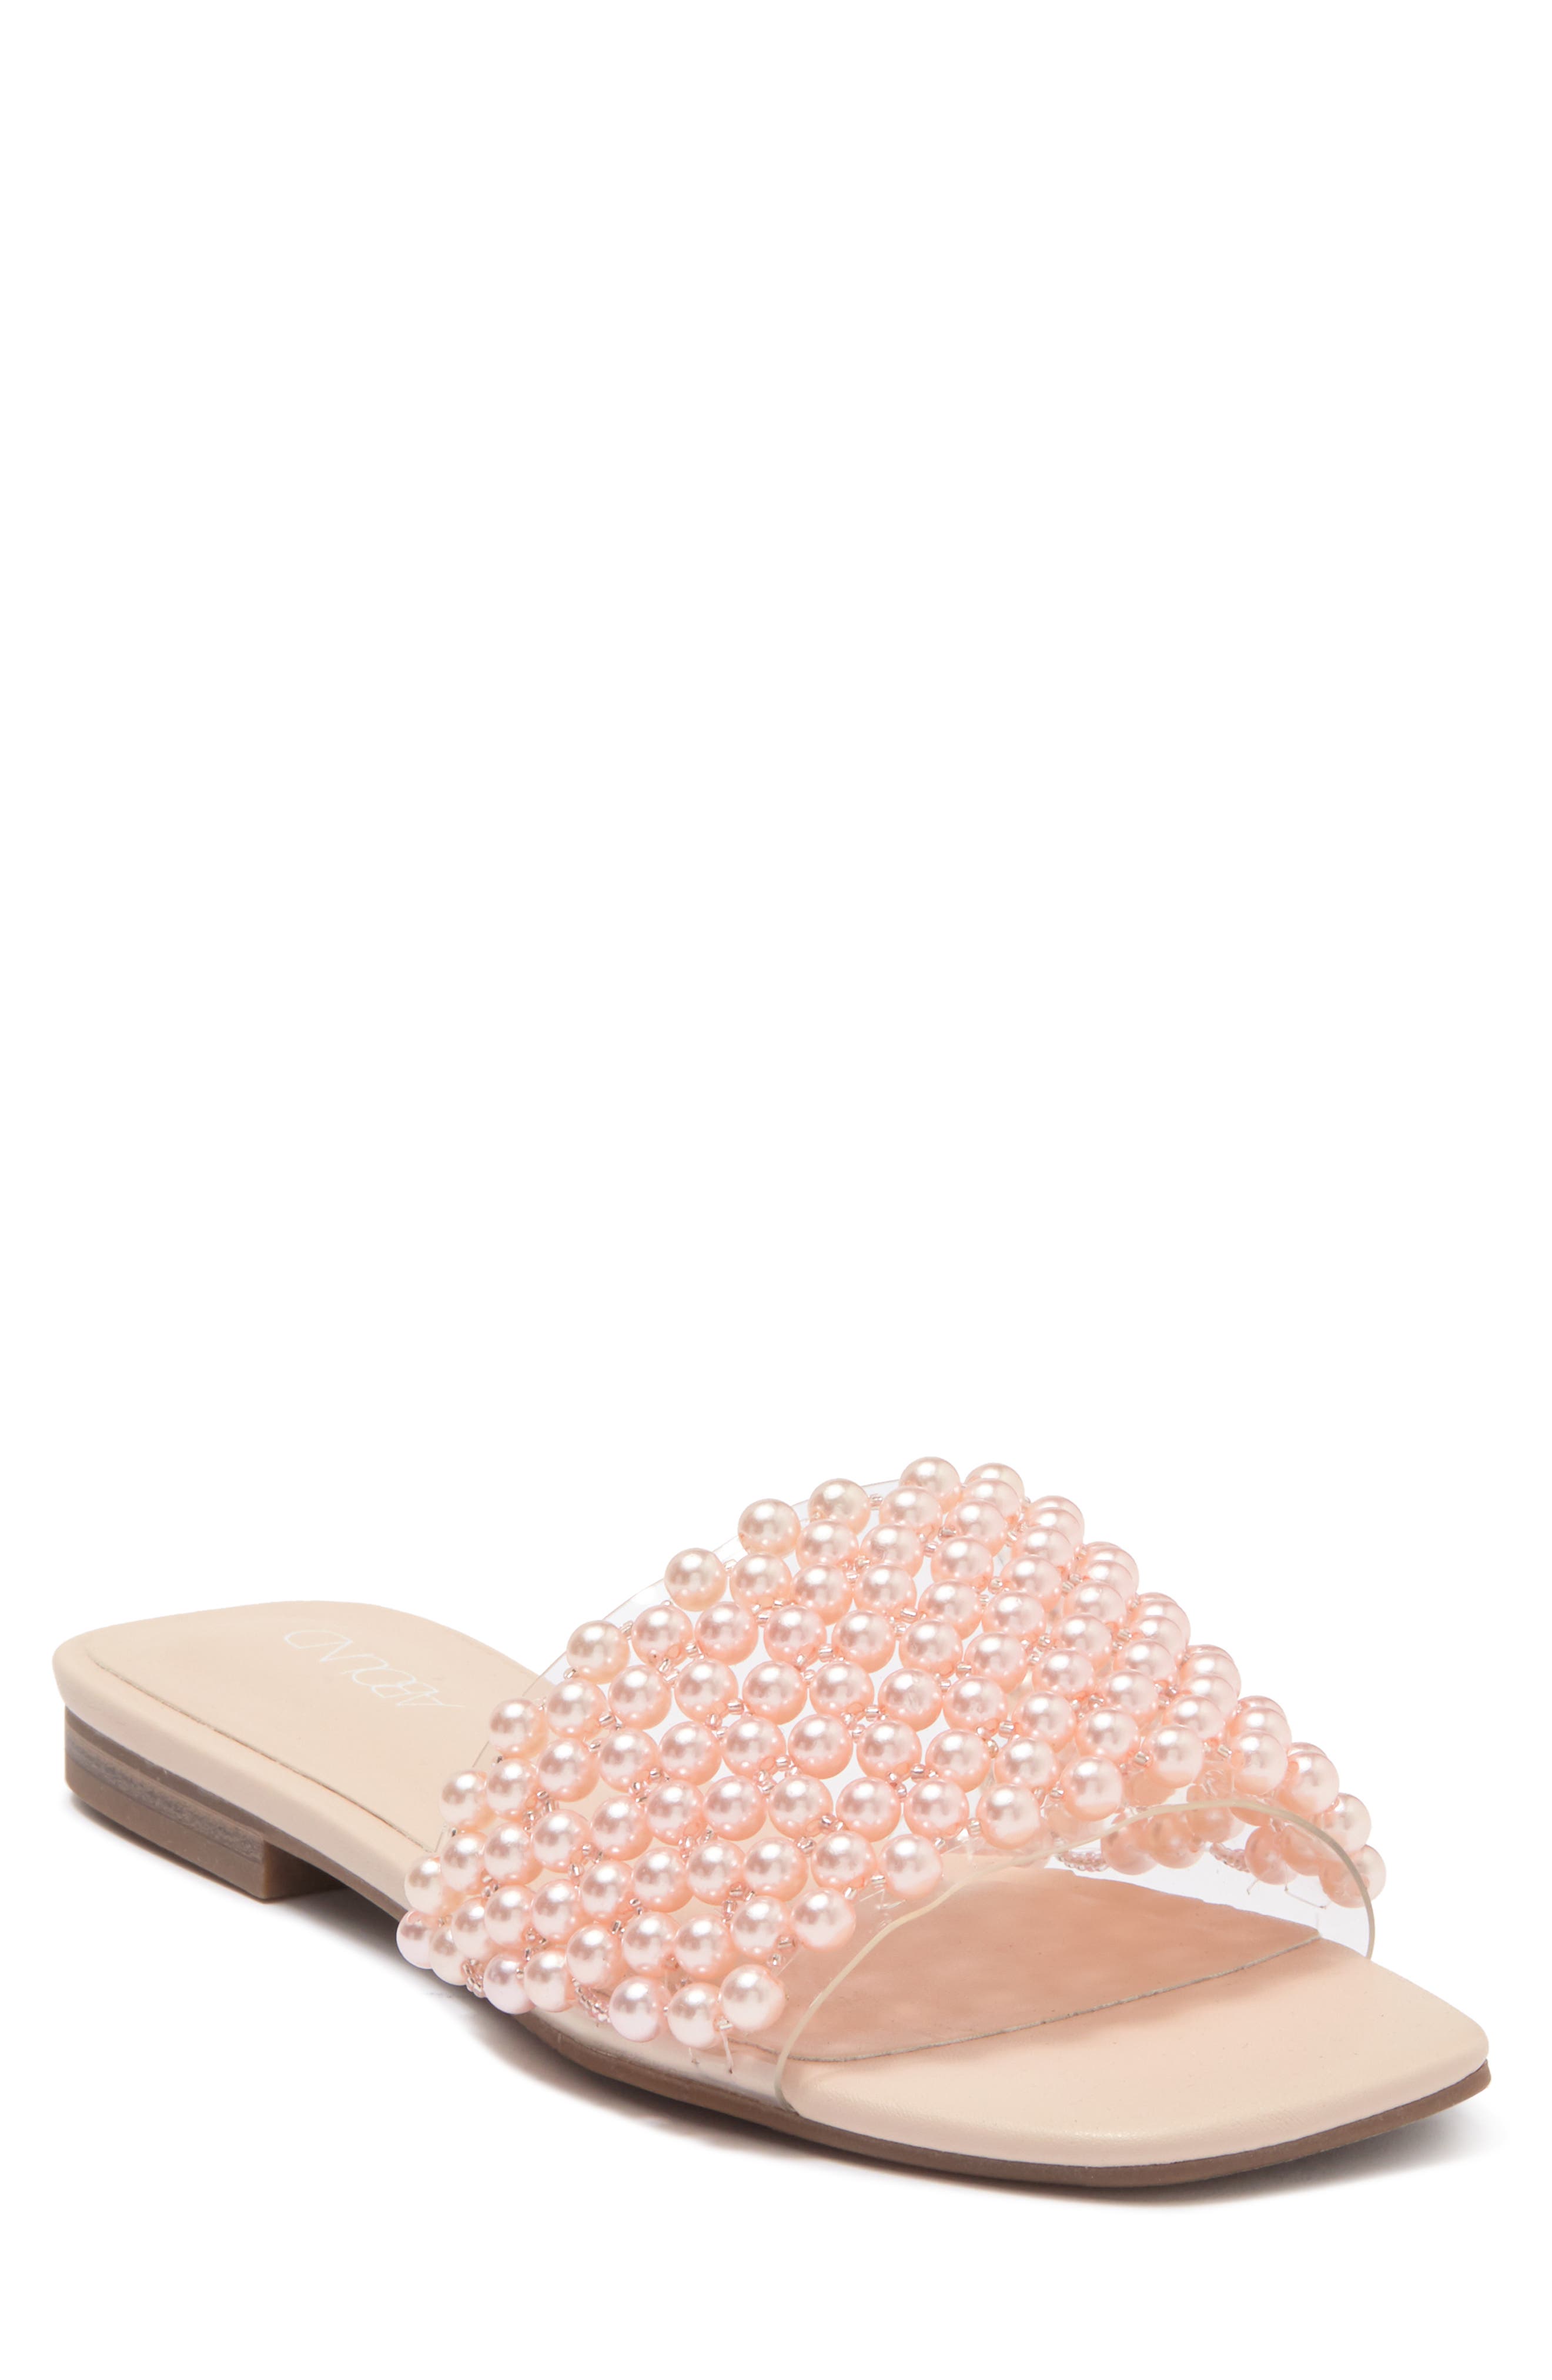 Abound Selah Faux Pearl Embellished Slide Sandal In Pink Pearl